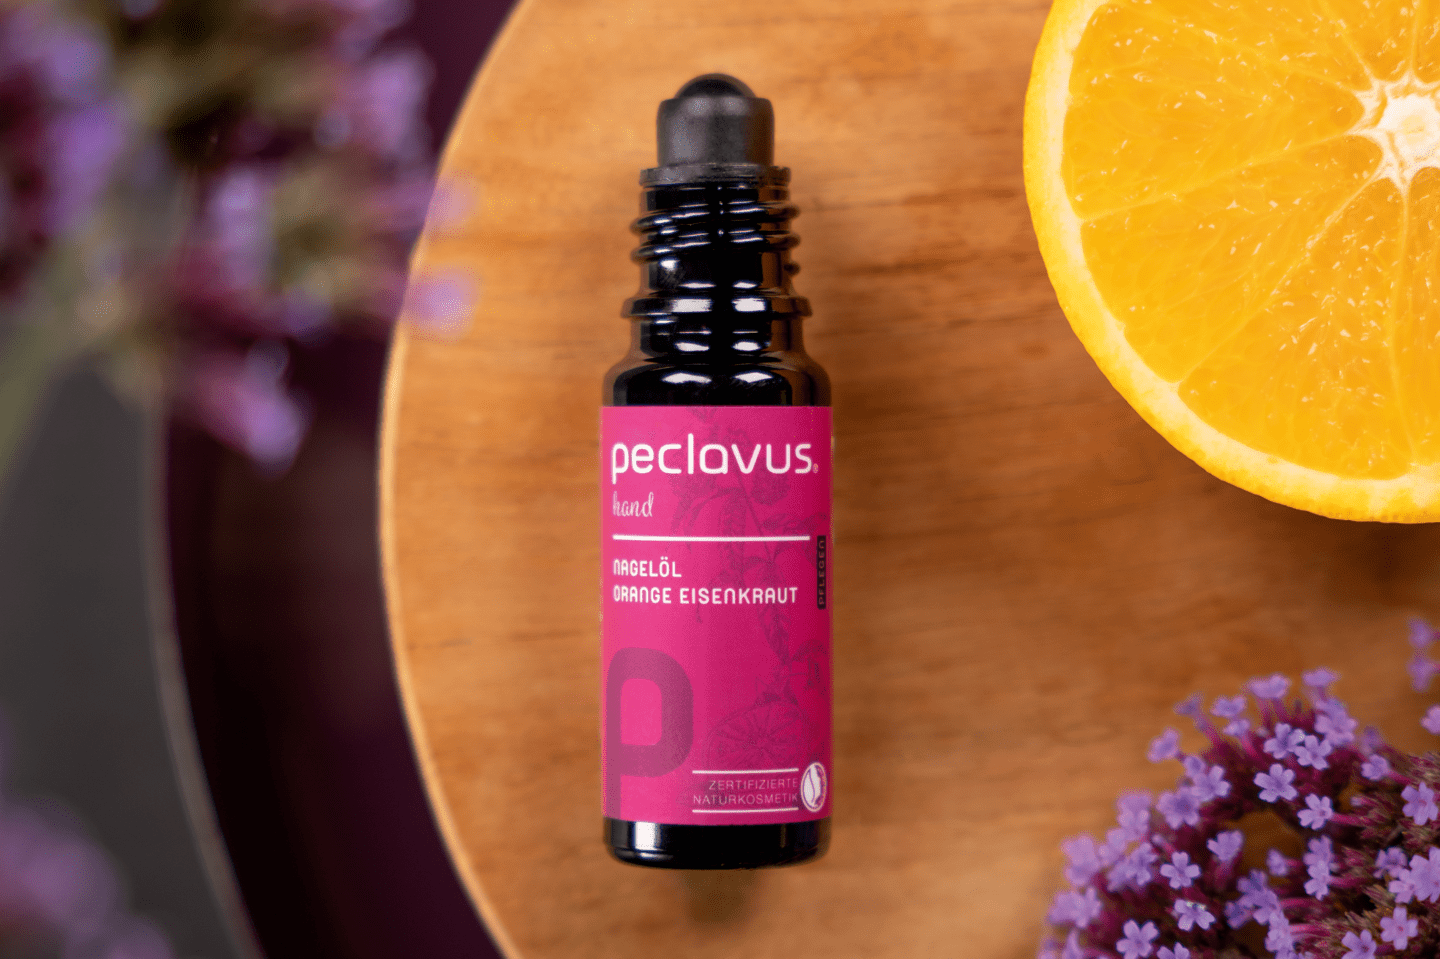 peclavus - Nagelöl Orange Eisenkraut | Pflegen, 10 ml